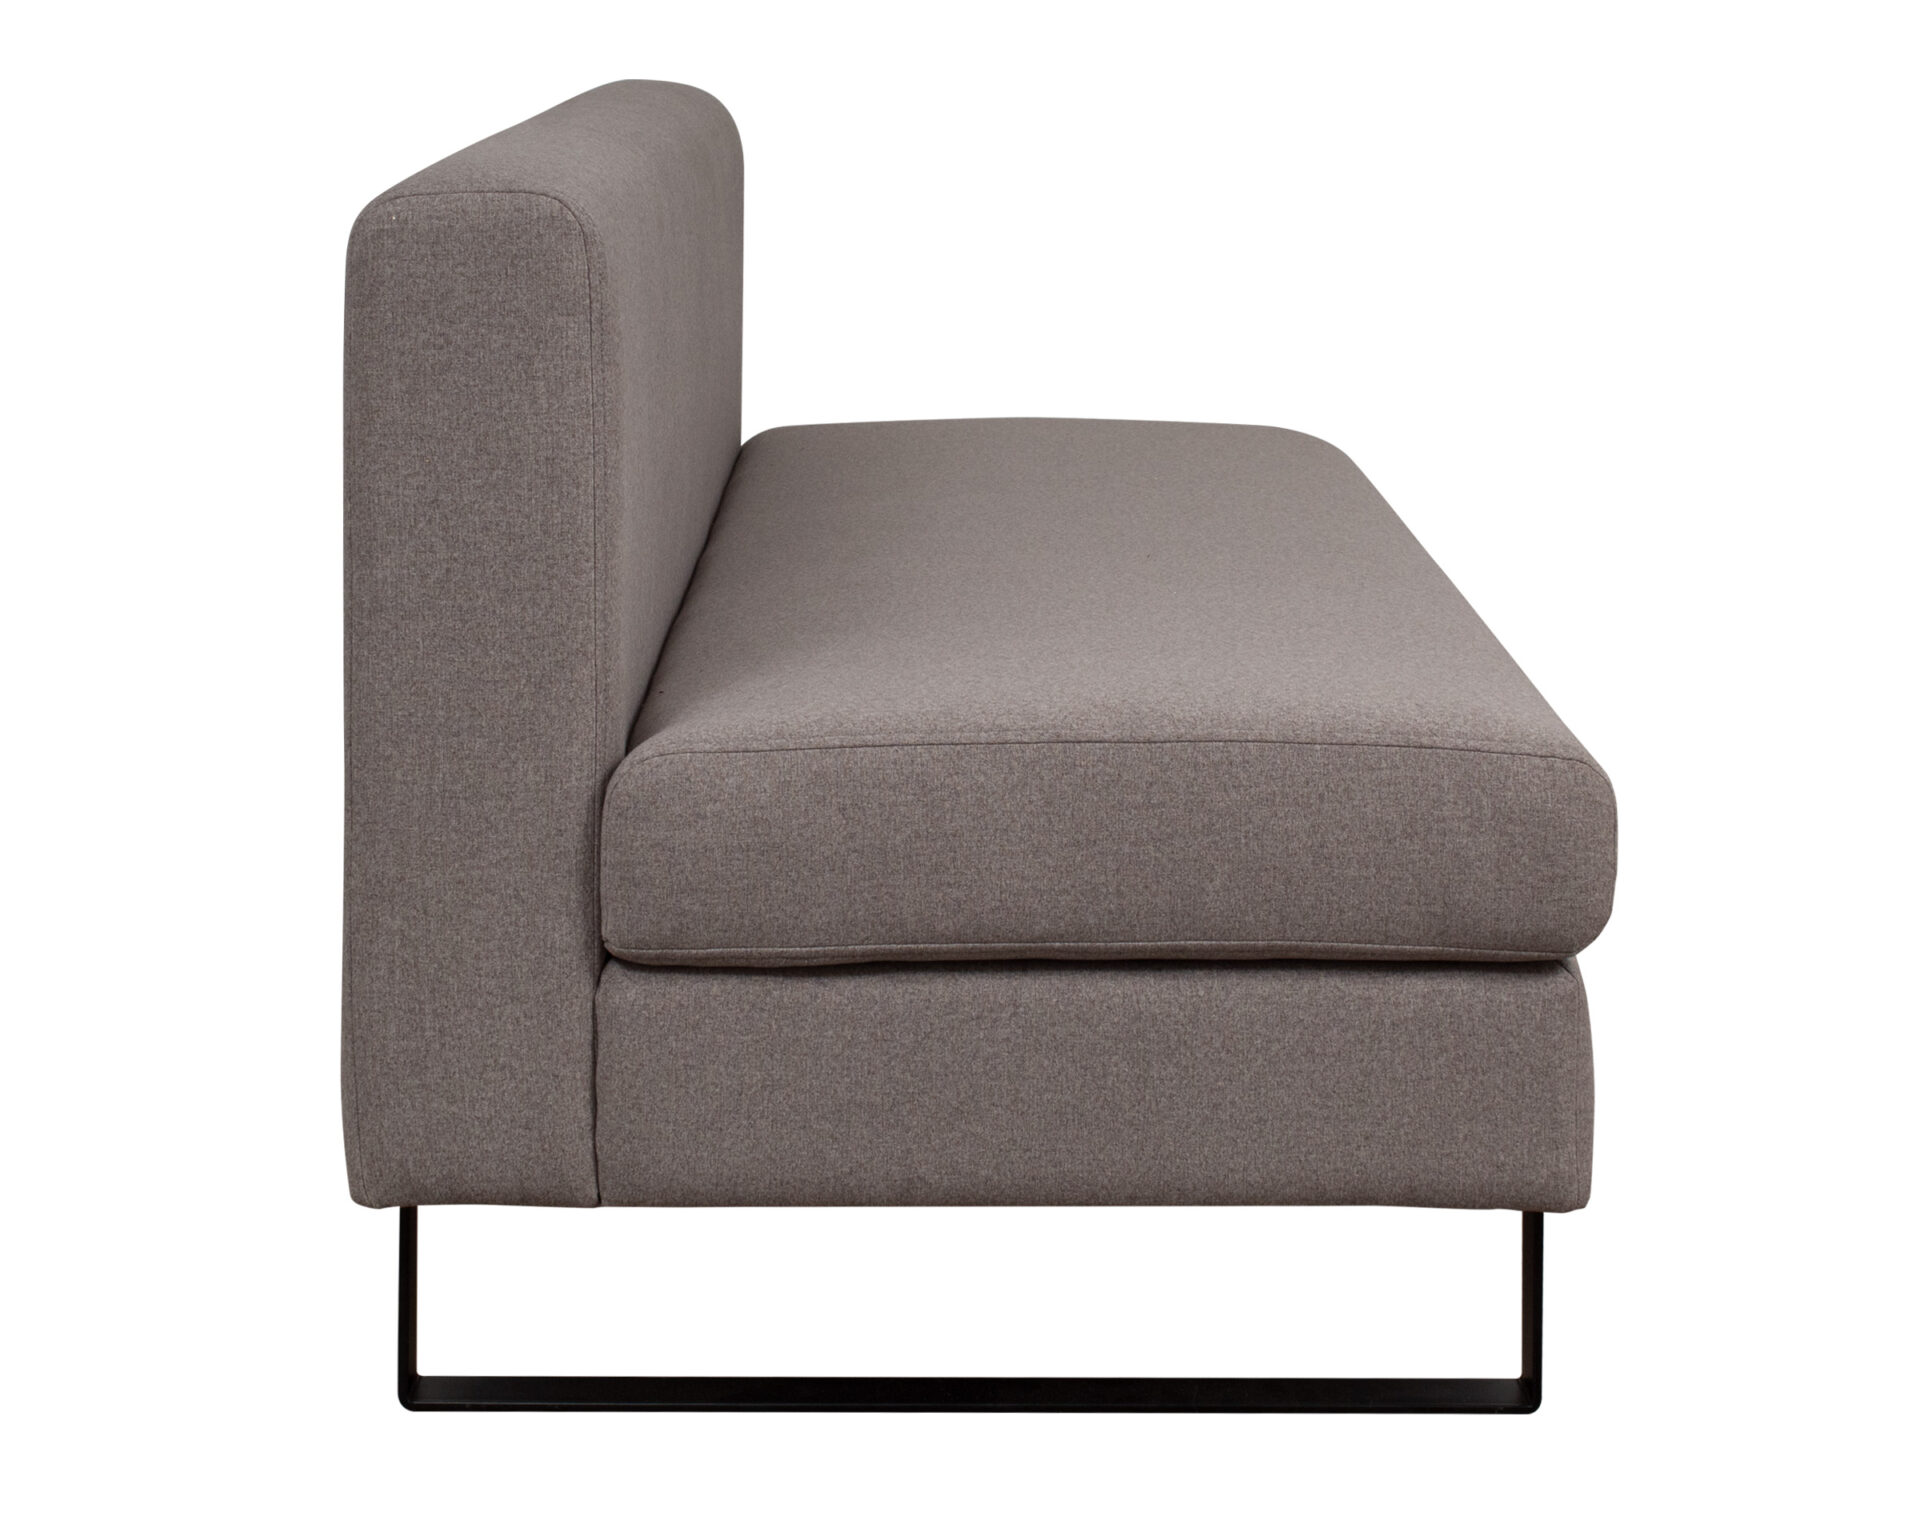 sofa empresa asiento pegado tela vv27 y zocalo metalico negro lateral